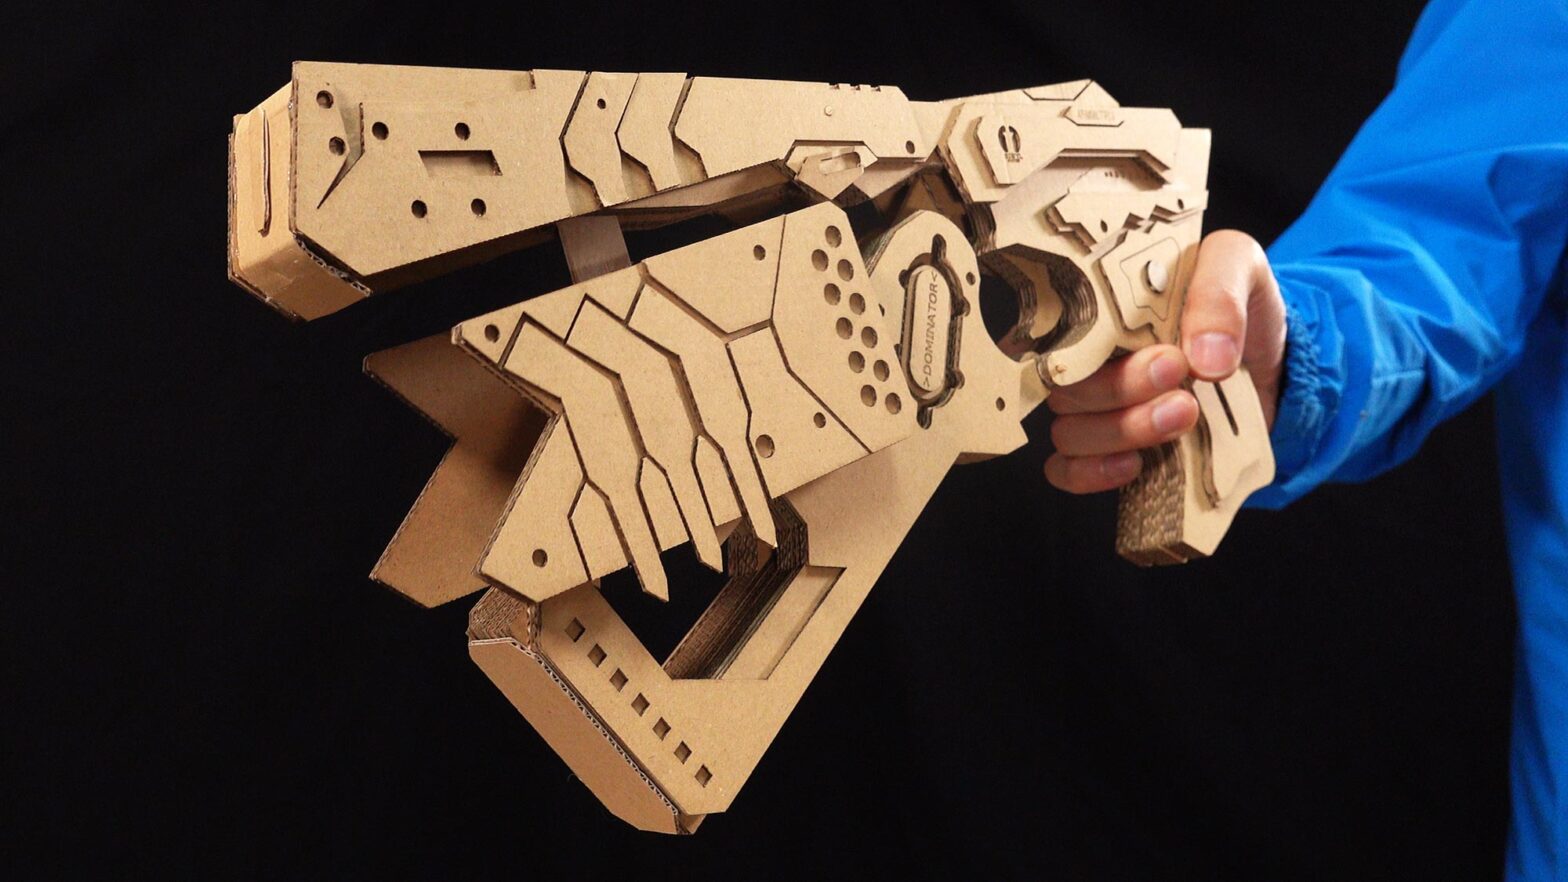 Crafty Transformer diy cardboard оружие из картона